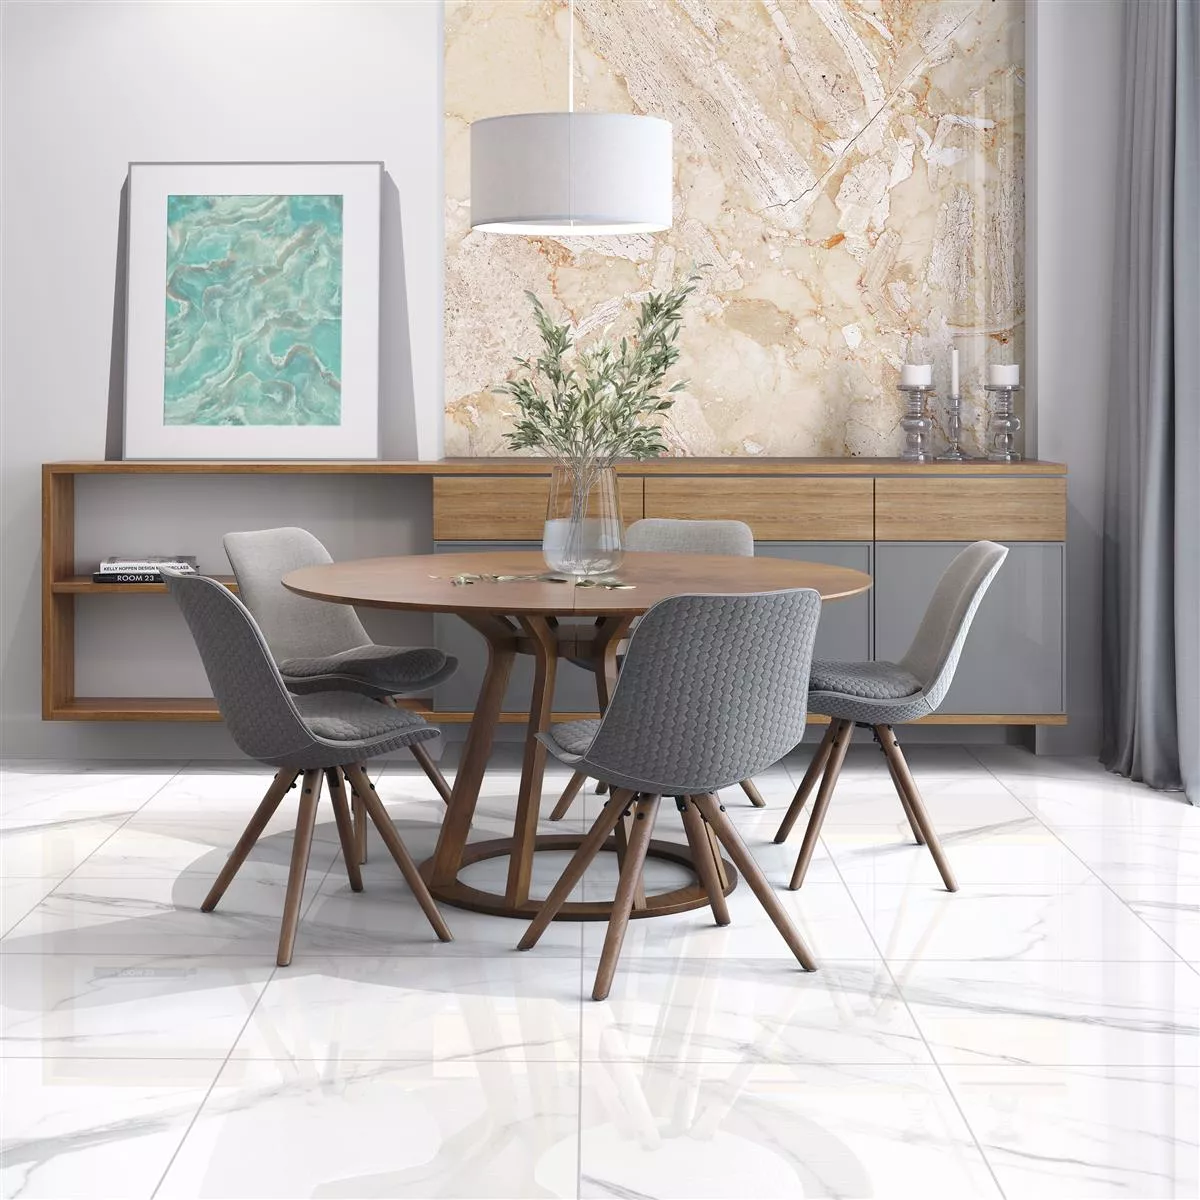 Floor Tiles Serenity Marble Optic Polished Blanc 60x60cm